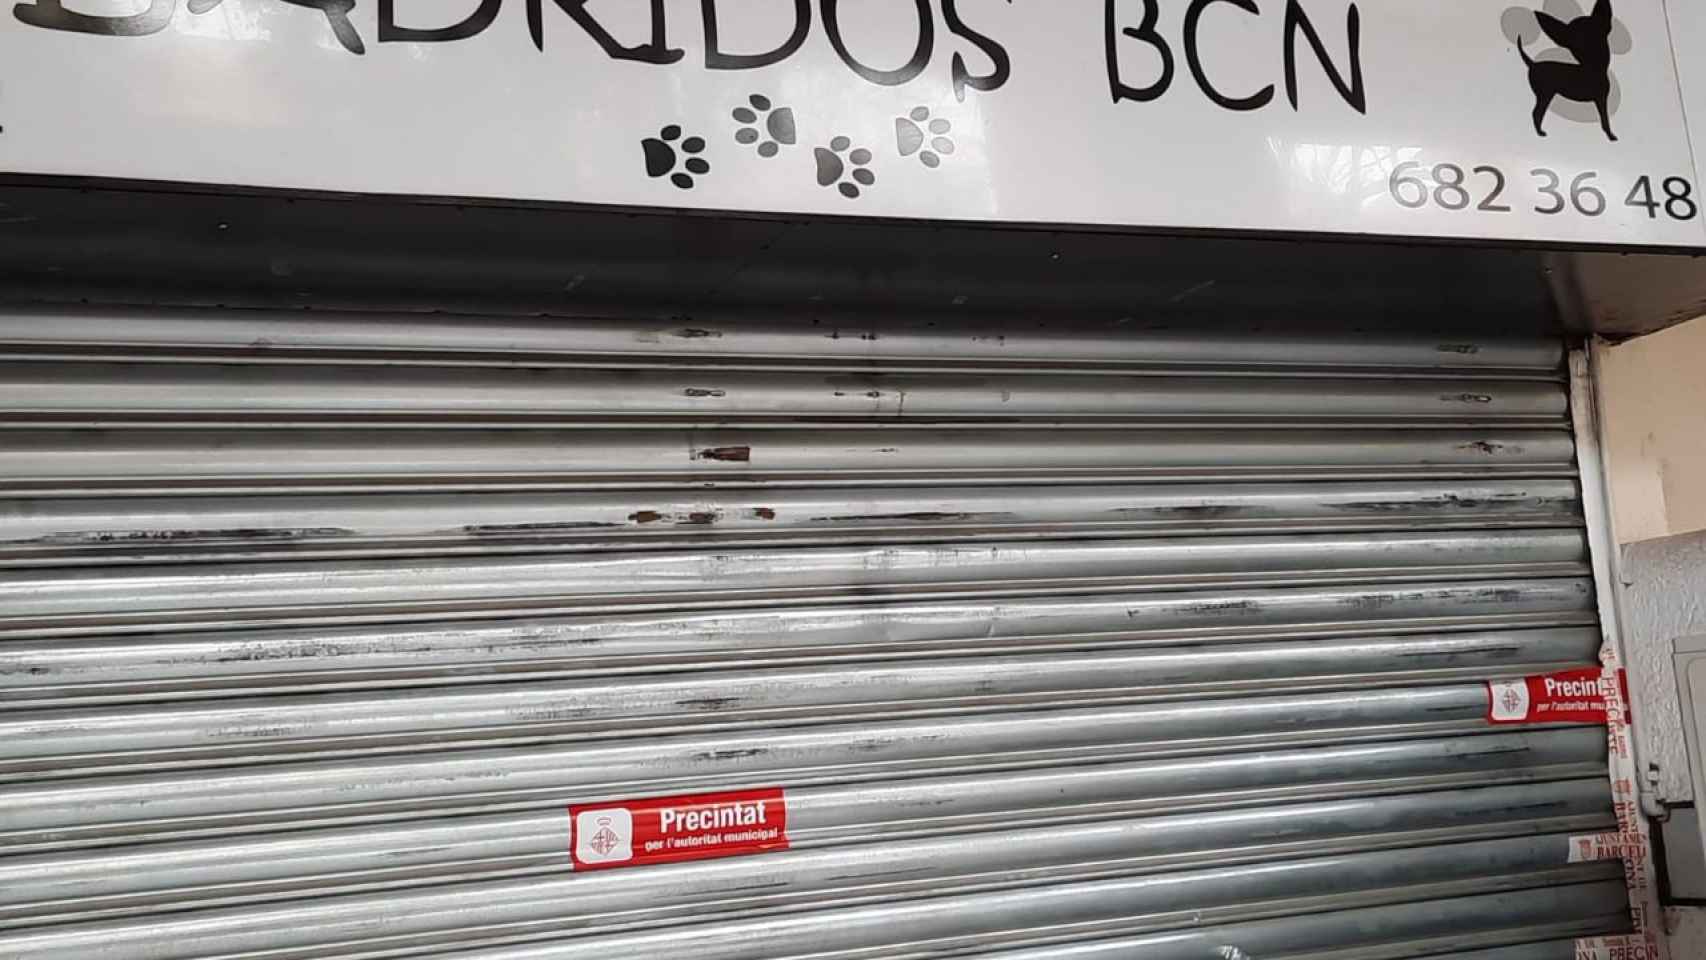 La tienda 'Ladridos'ha sido precintada /AJ BCN